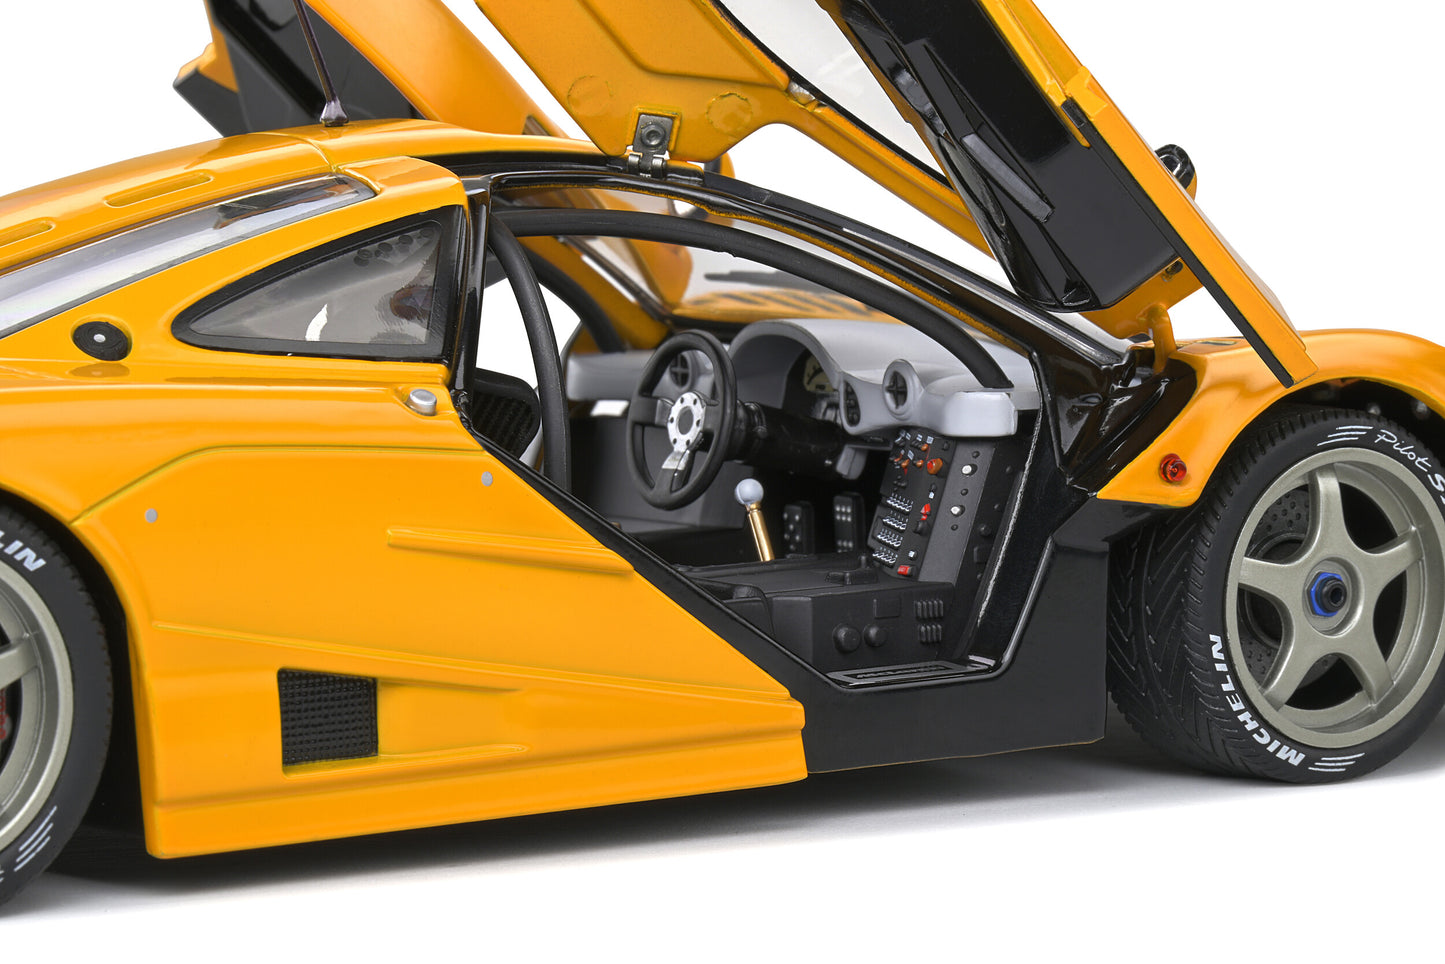 Solido - McLaren F1 GT-R (Papaya Orange) 1:18 Scale Model Car